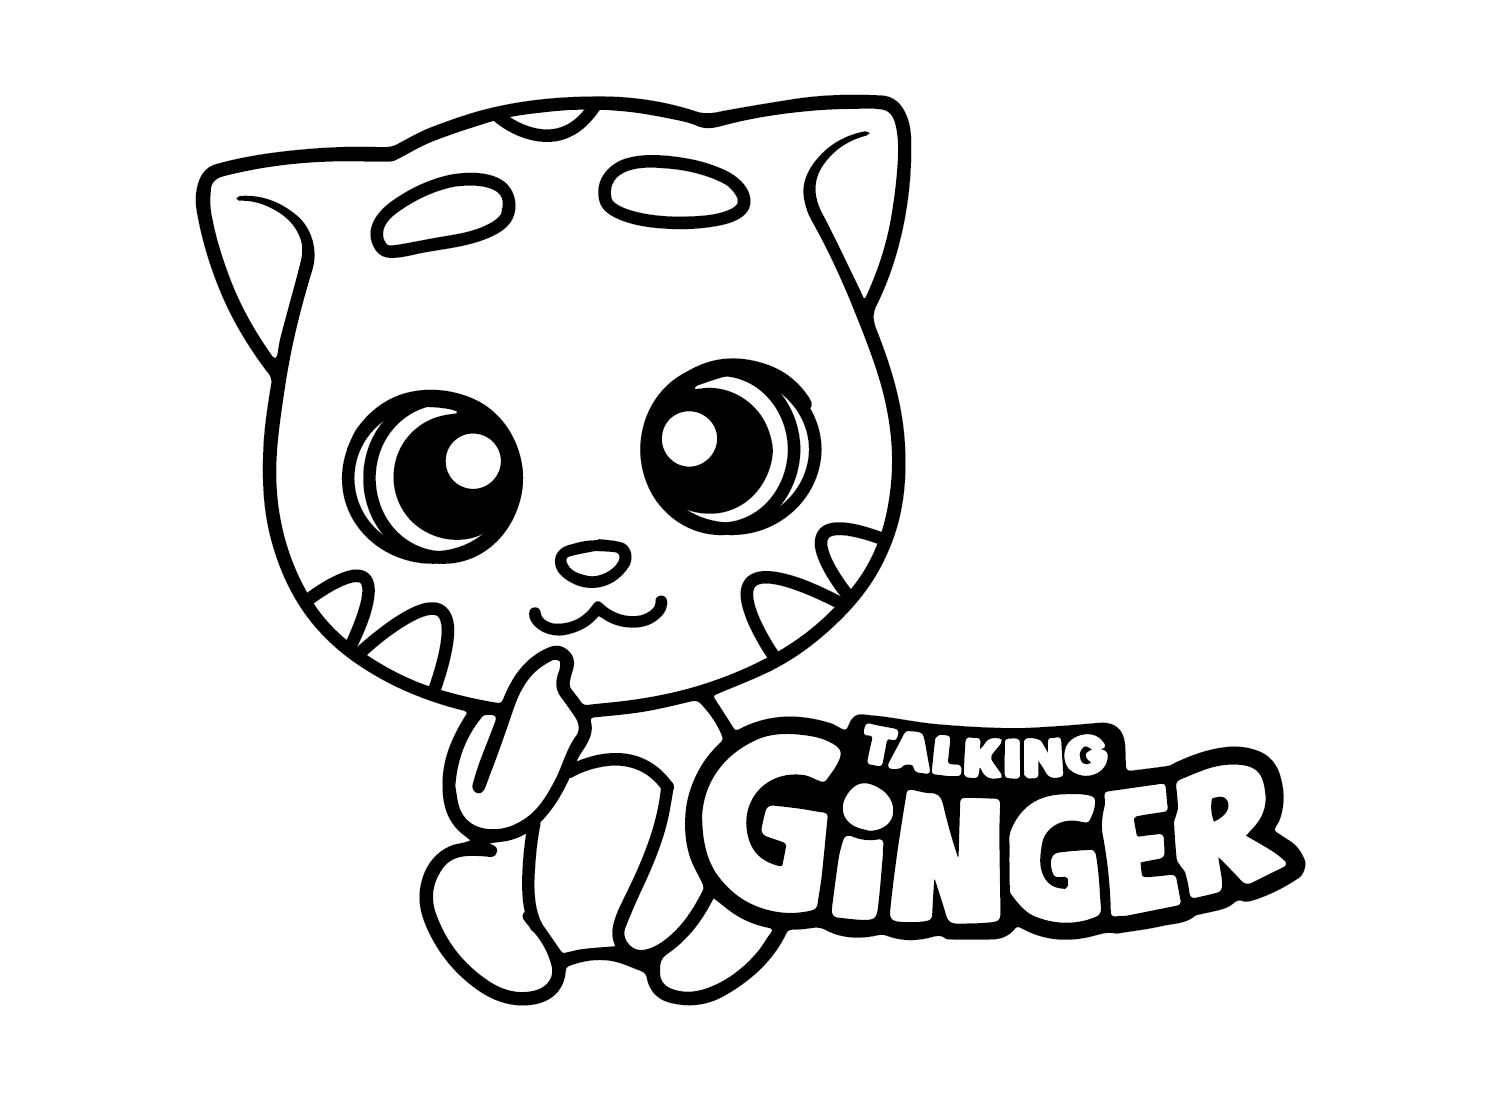 Cartoon Talking Ginger from Talking Ginger